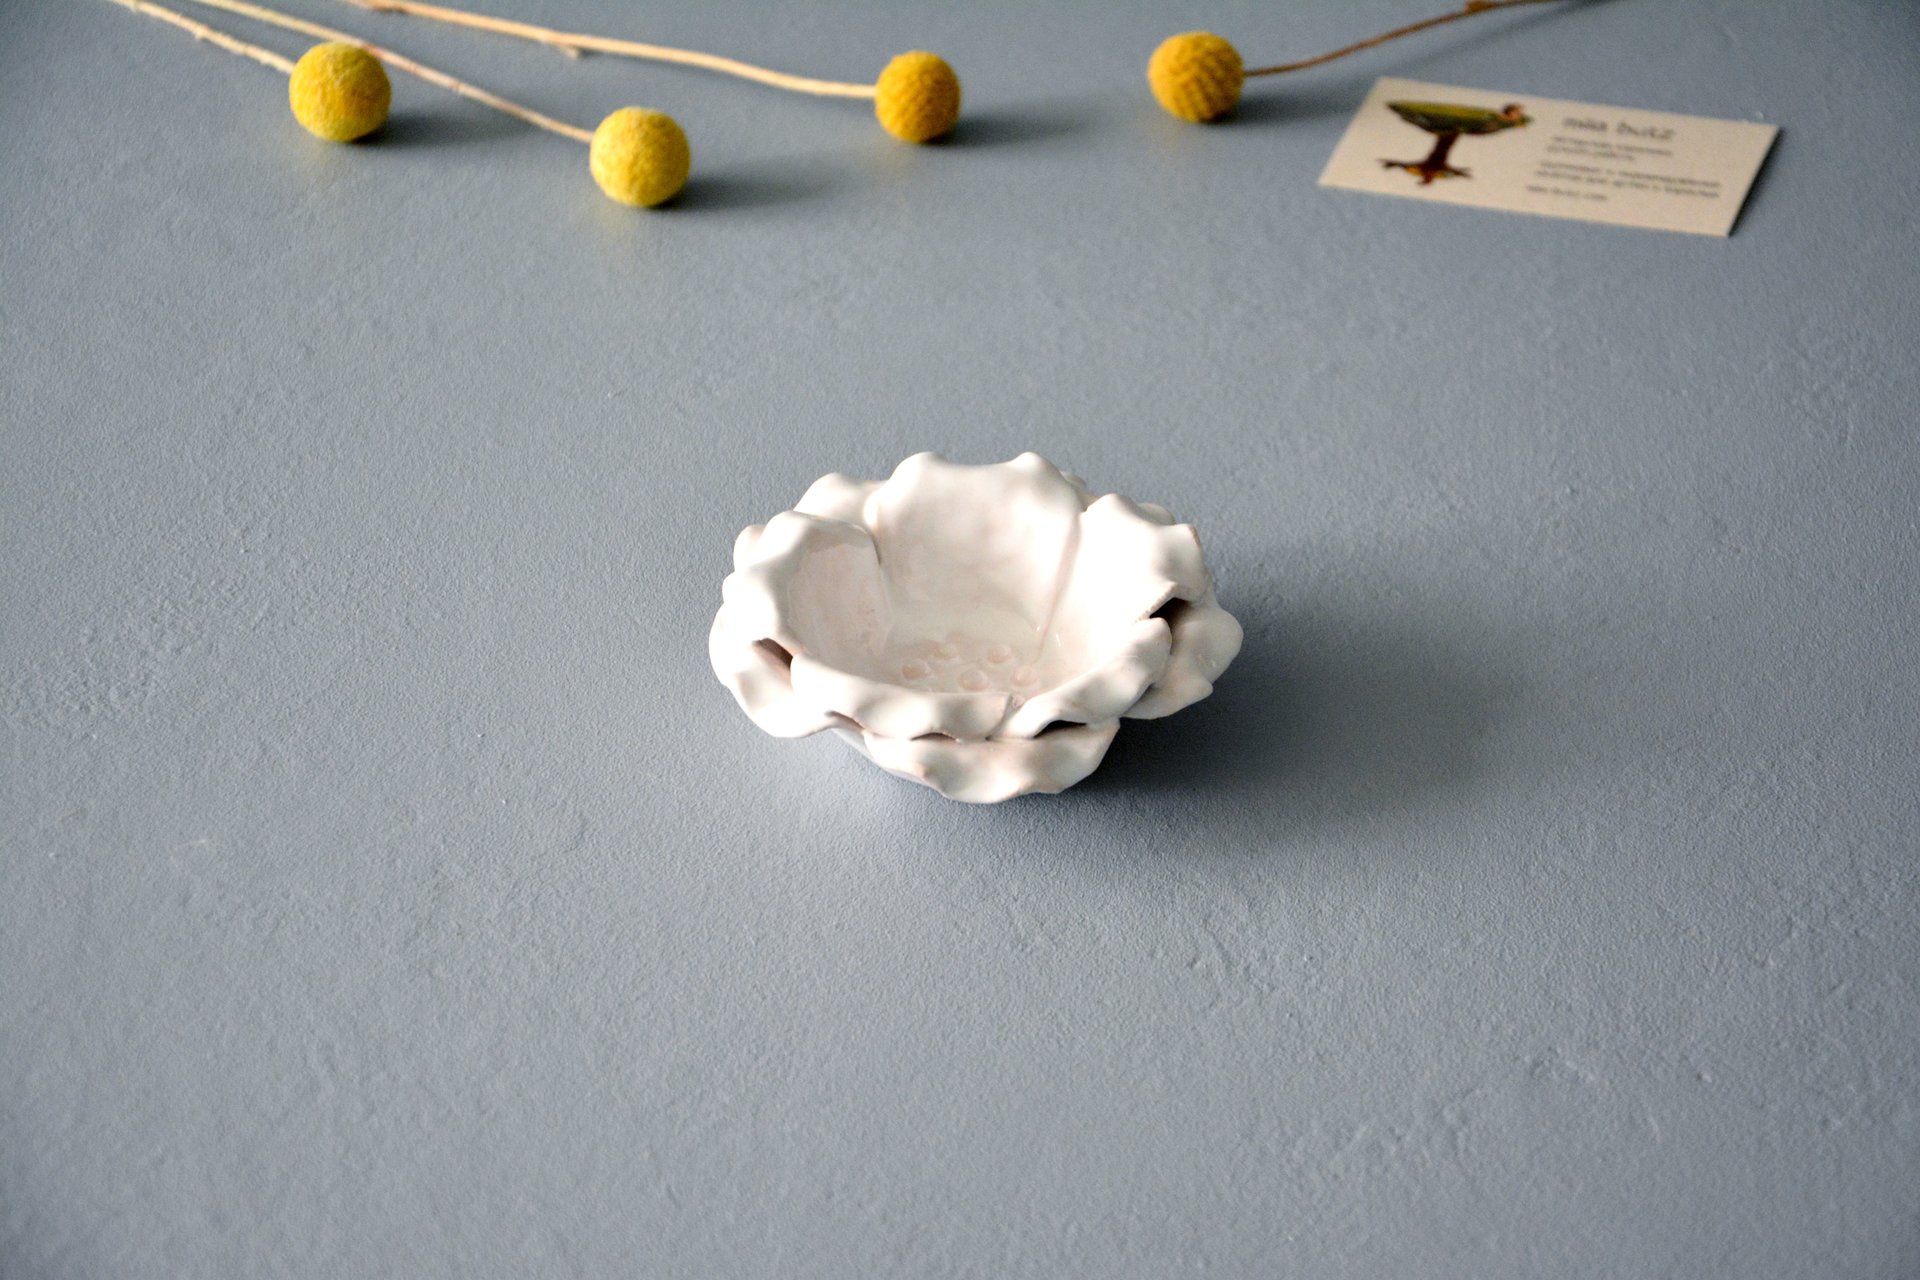 Candlestick White flower - Ceramic Candl-holders, diameter - 11.5 cm, photo 1 of 5.